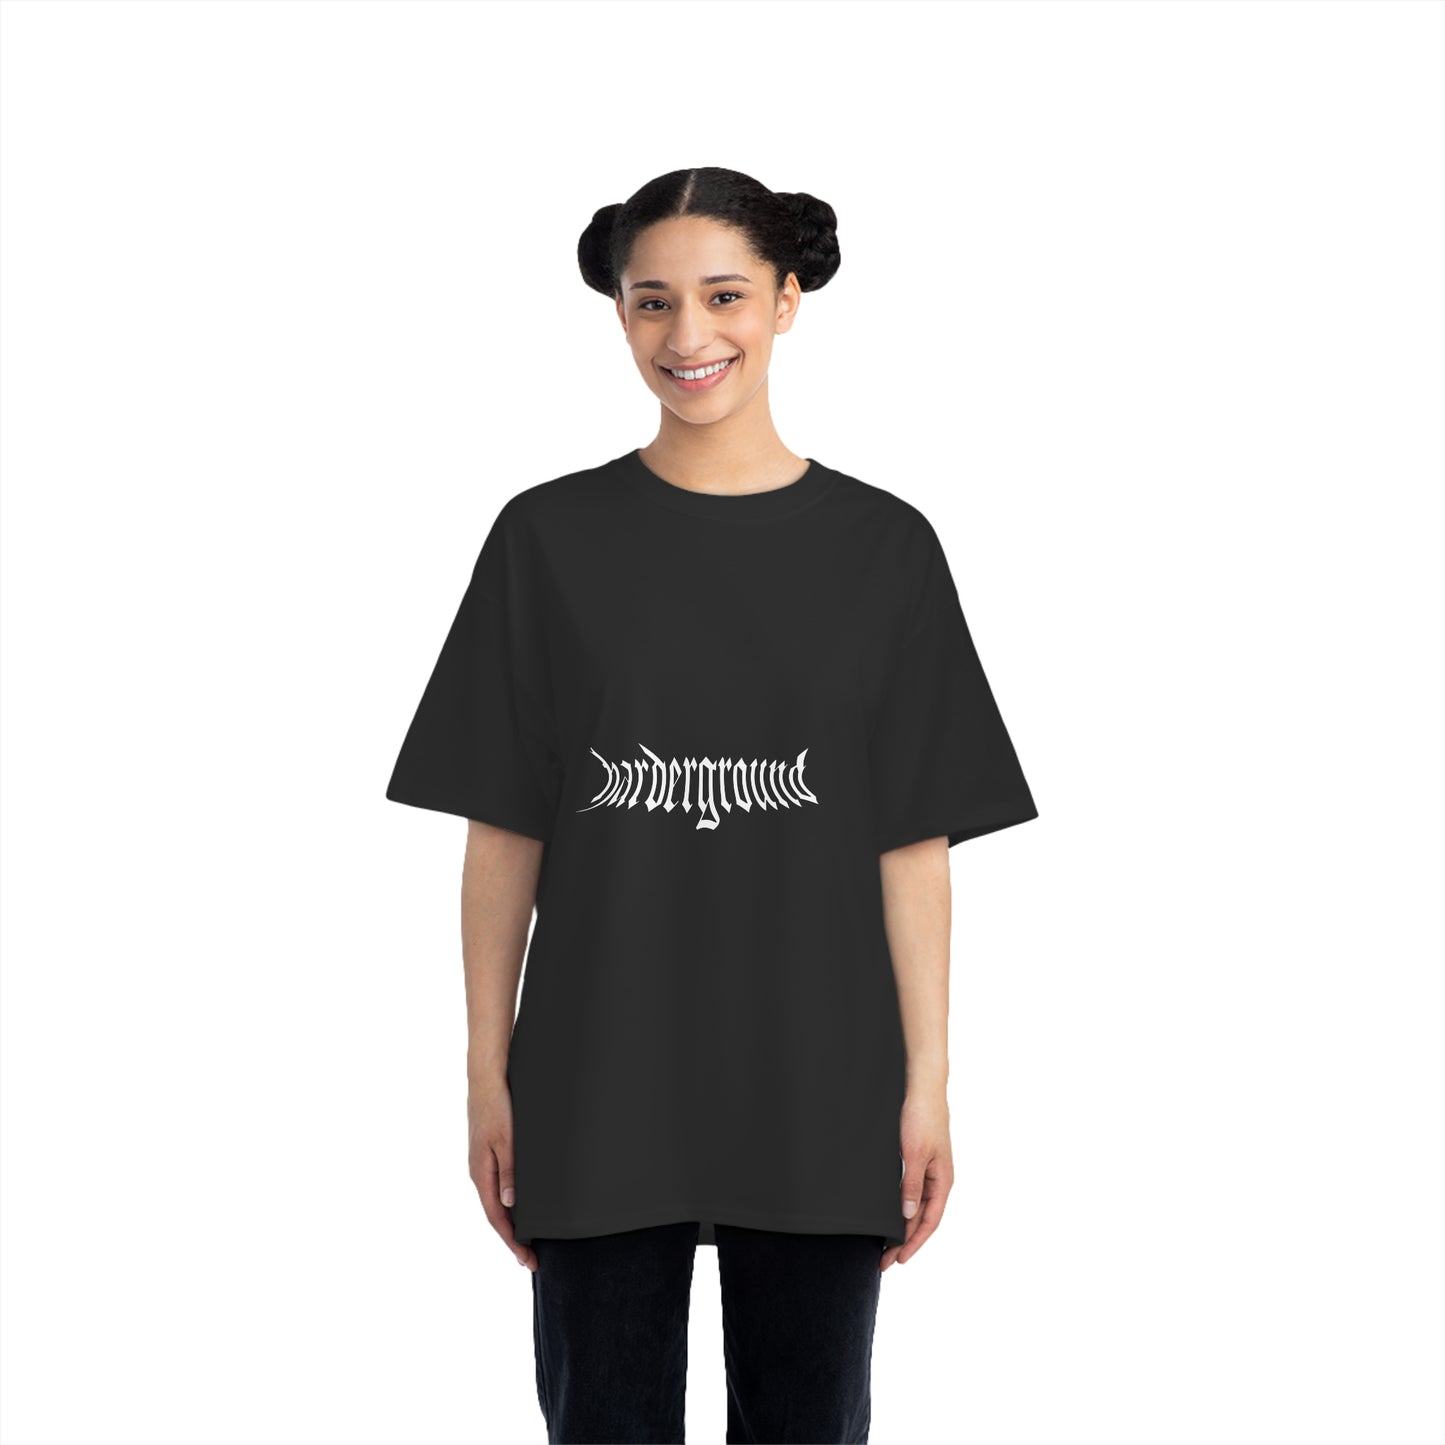 ADAMO - Harderground Front &amp; back logos - Beefy-T® Short-Sleeve T-Shirt